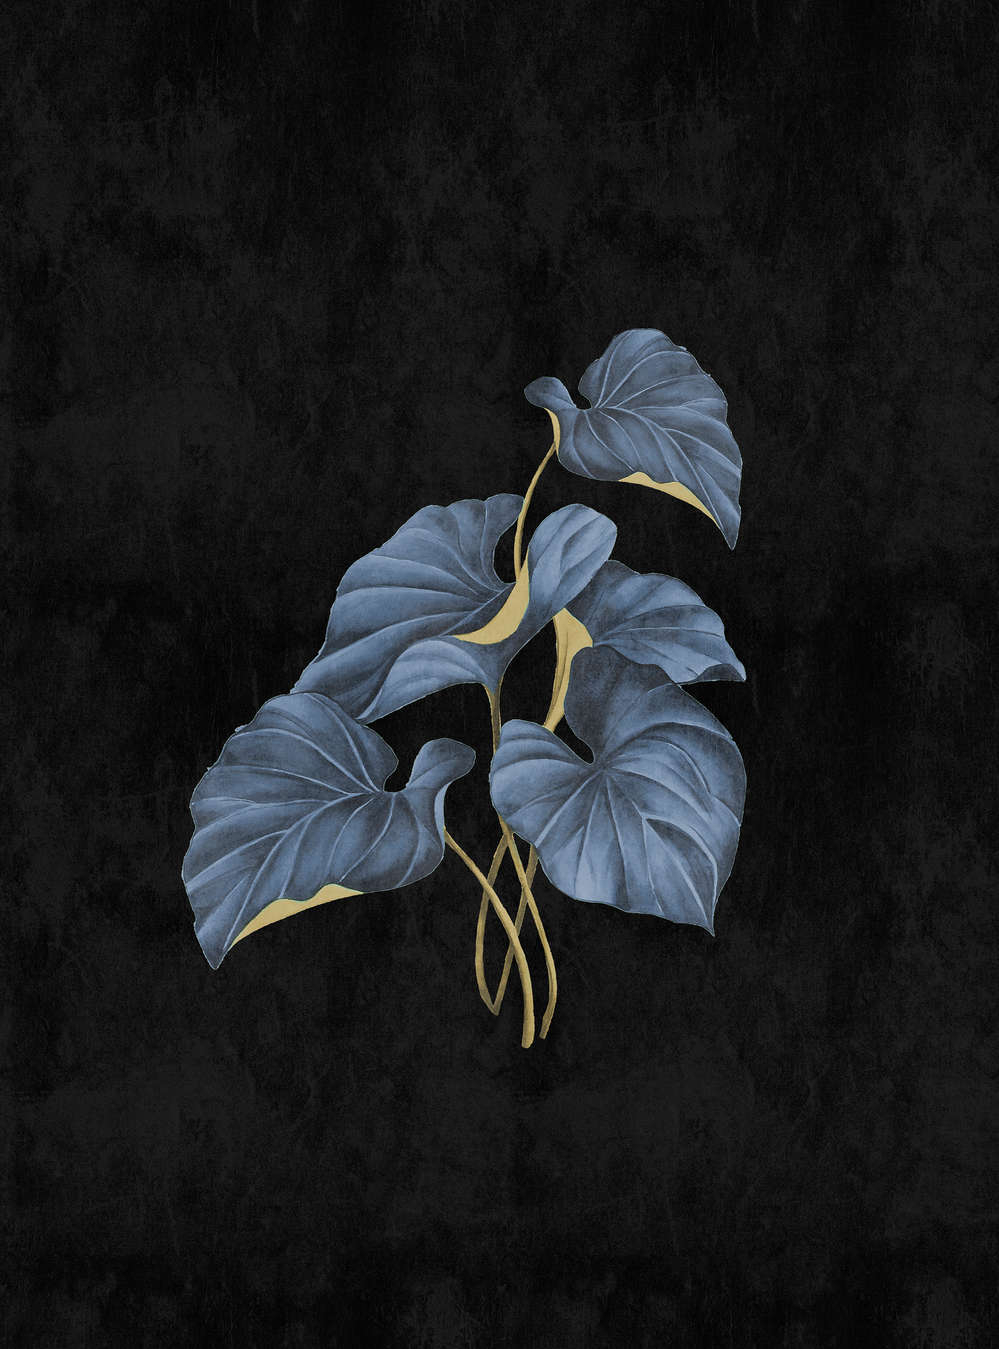             Fiji 1 - Mural negro de hojas azules con acento dorado
        